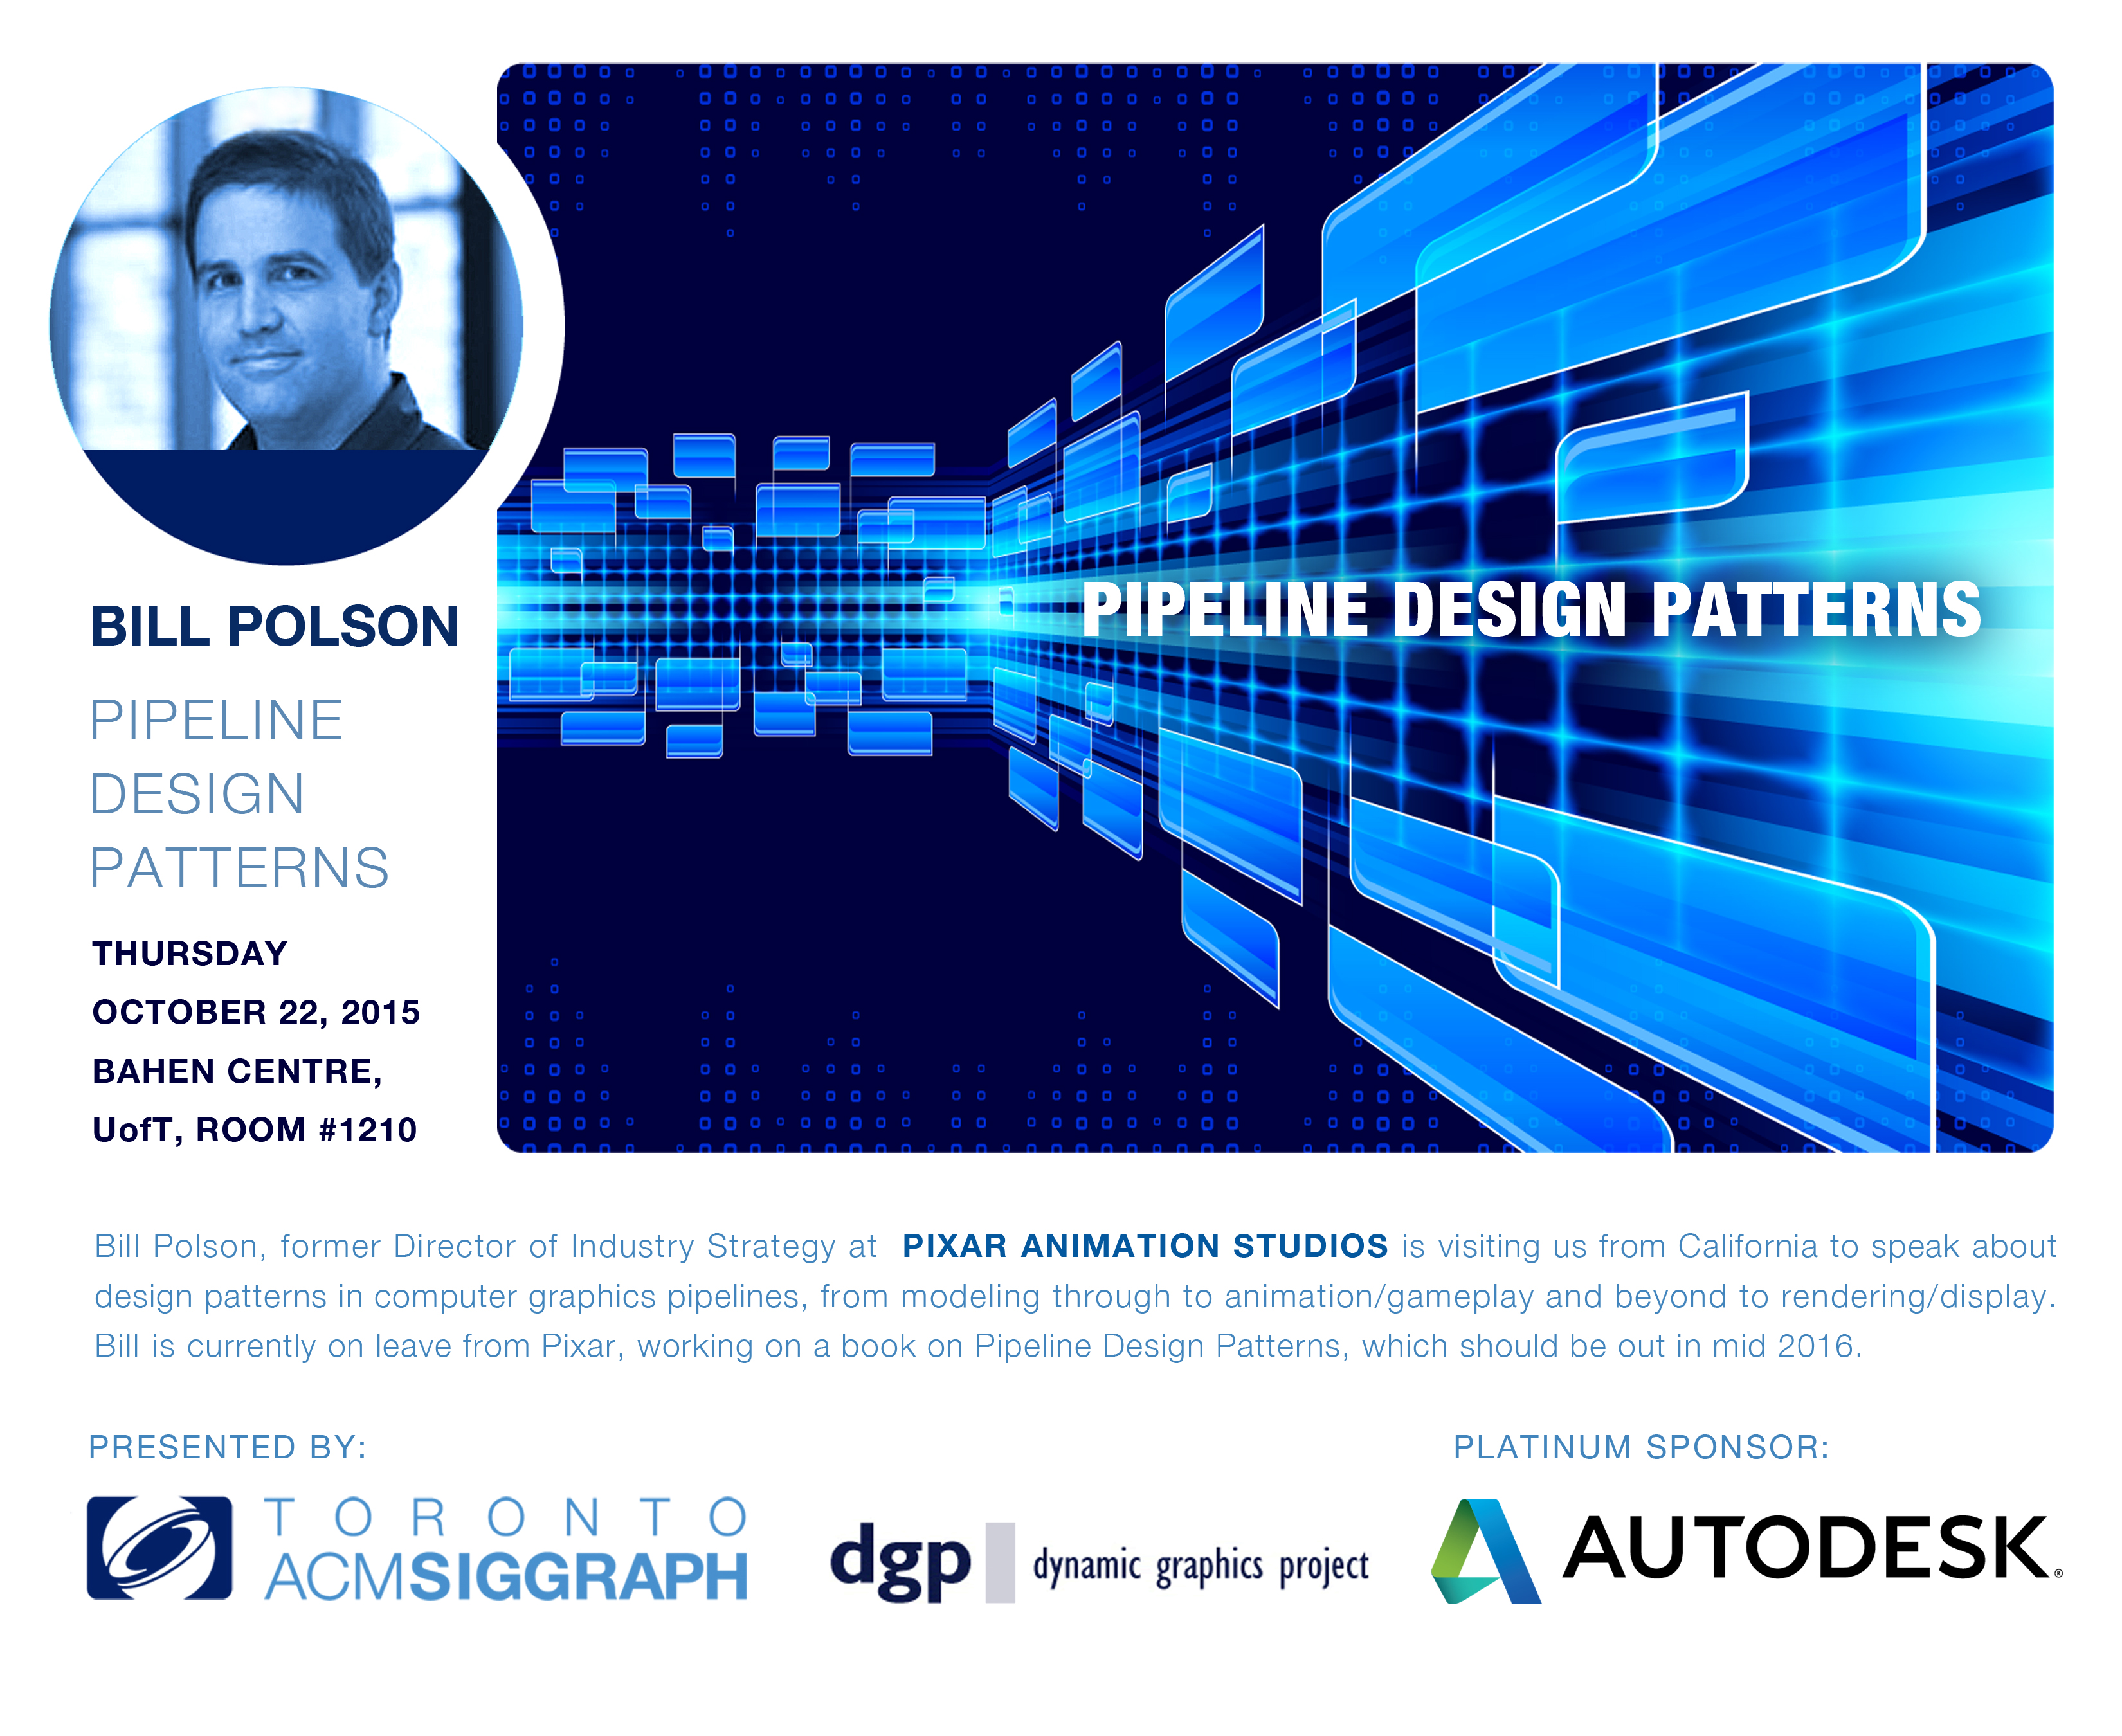 Pipeline Design Patterns